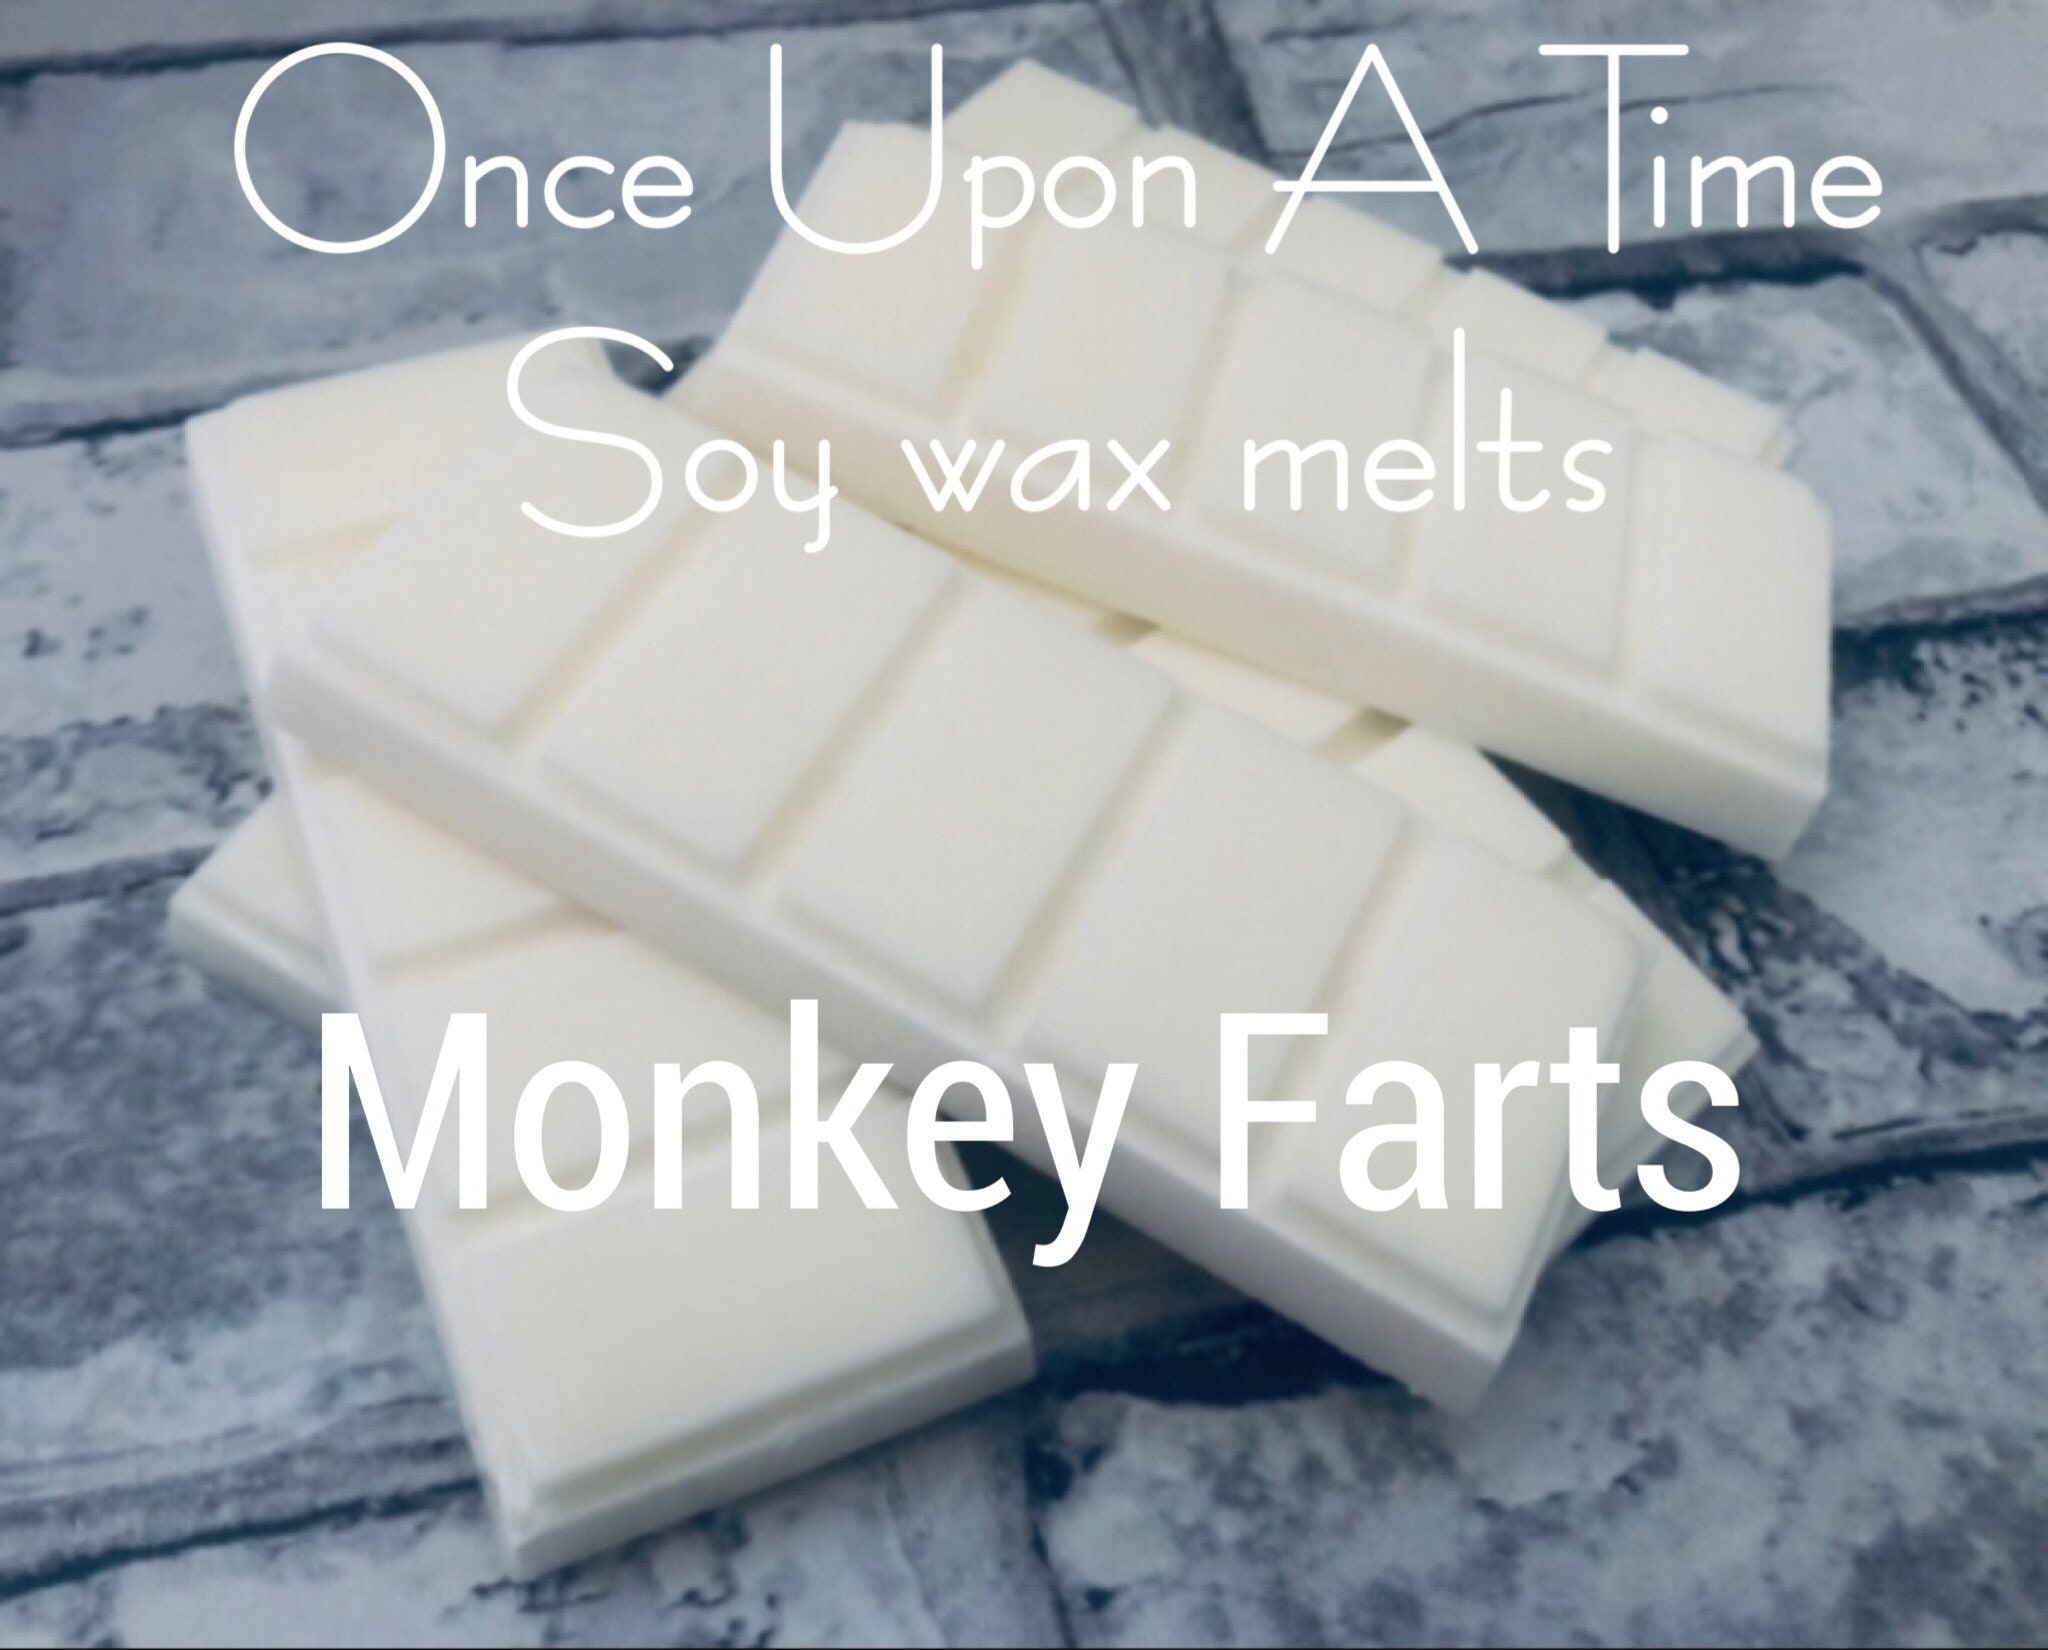 Monkey Farts Soy Wax Melts Wax Tarts Scented Wax Melts Wax Cubes